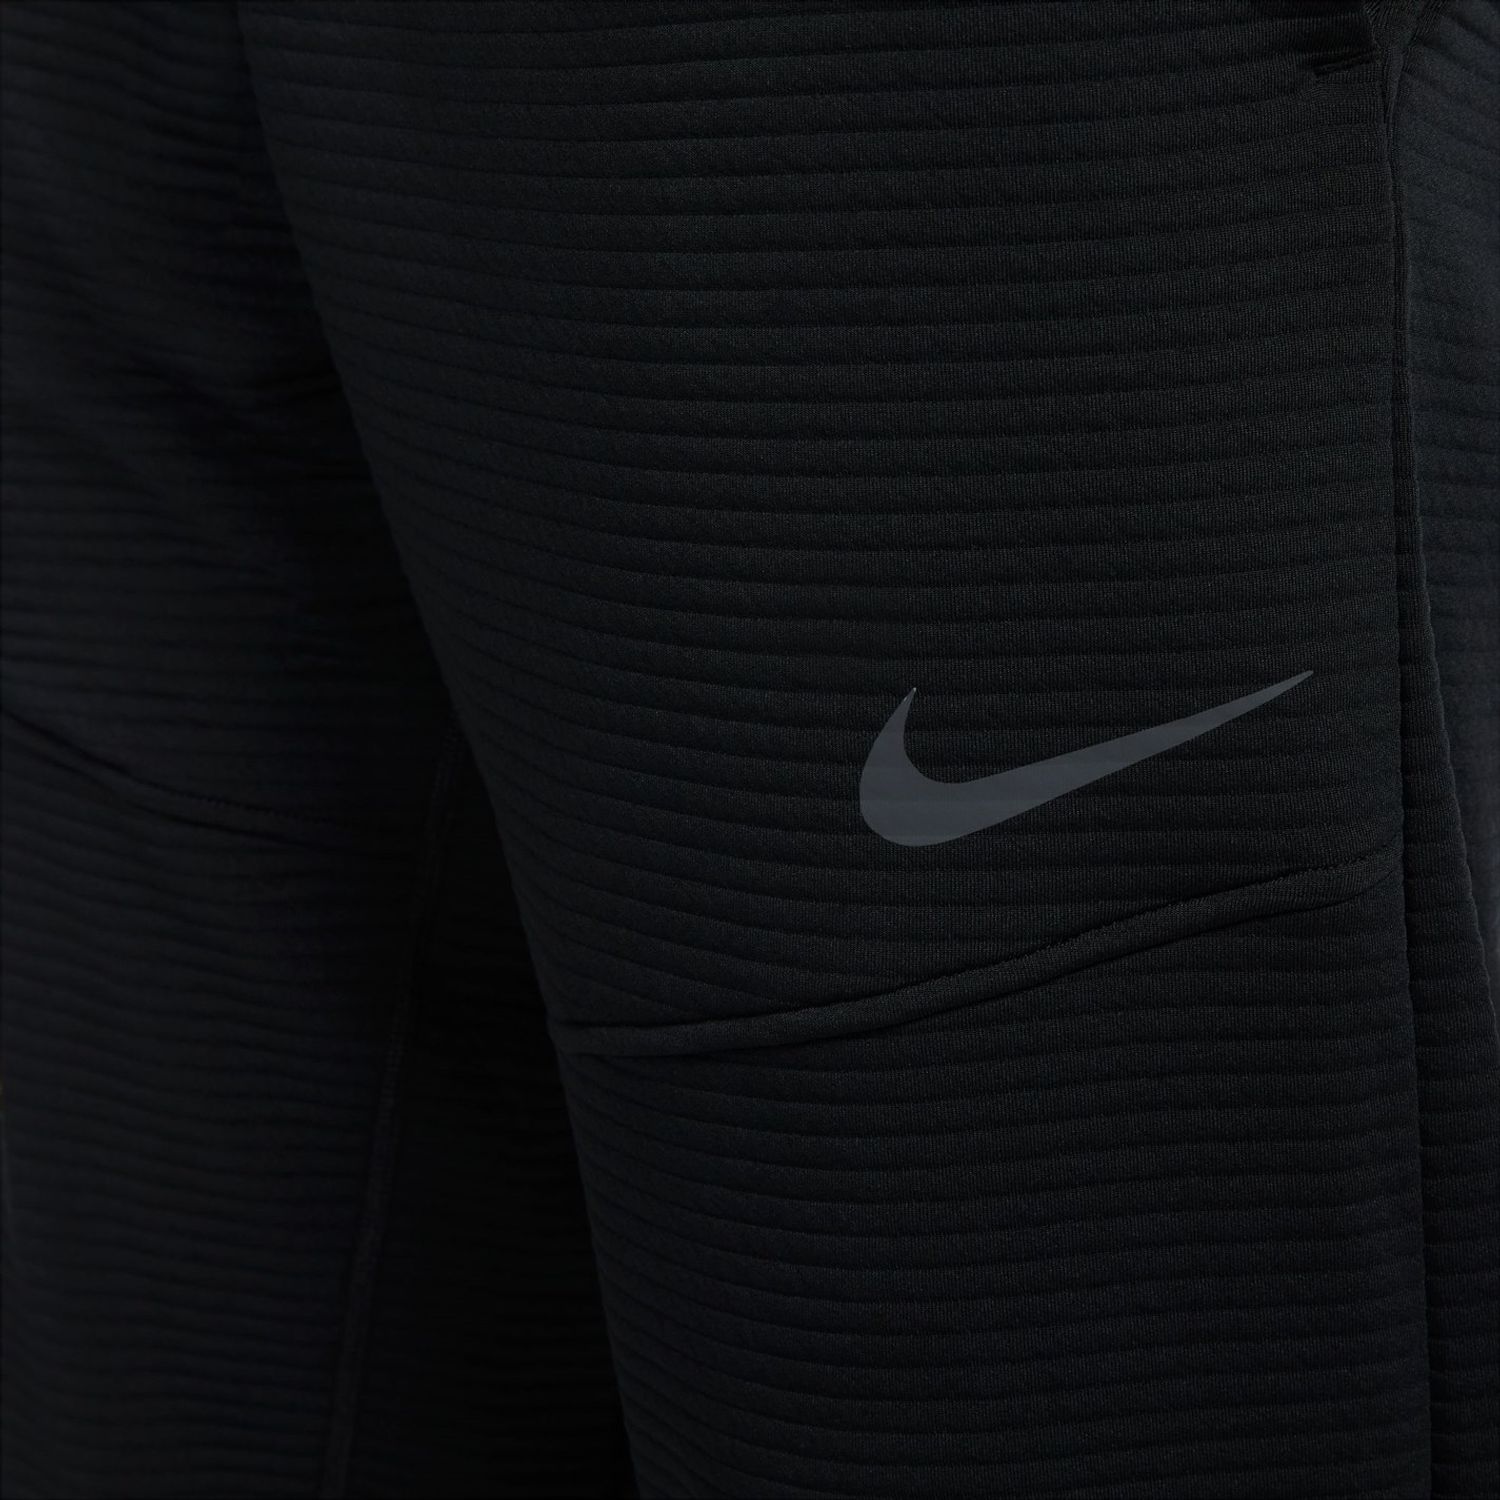 Black Nike Mens Pro Fleece Fitness Pants - Get The Label